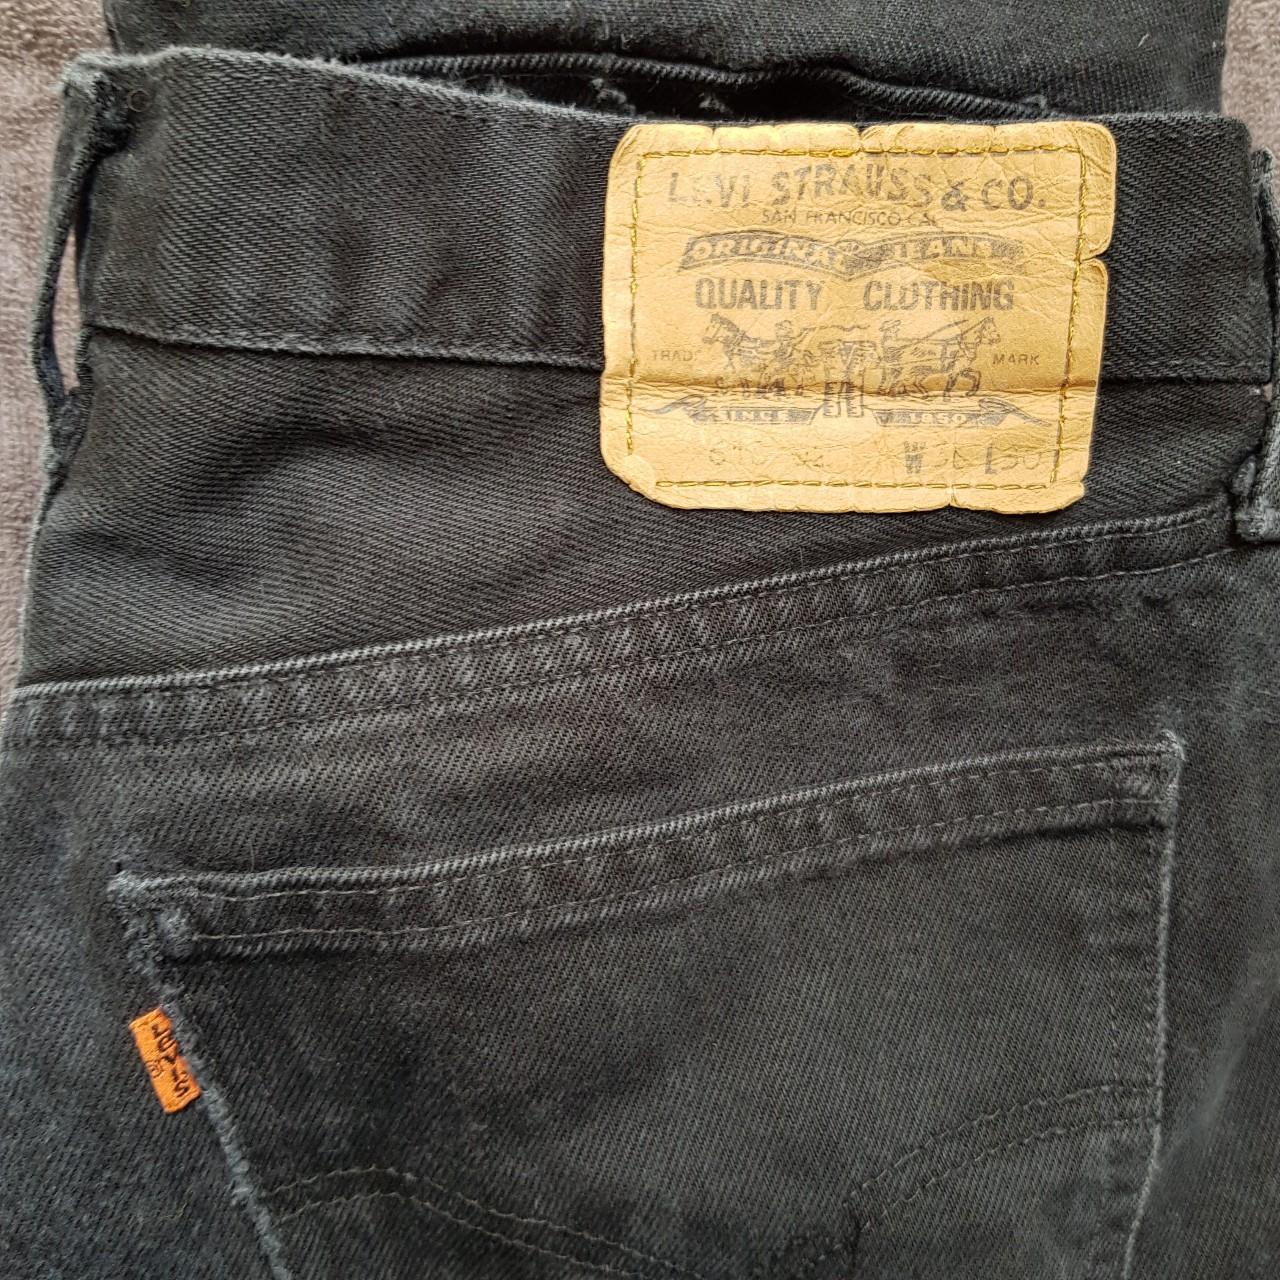 Vintage Levis 513 orange tab (W36L30) some wear and... - Depop